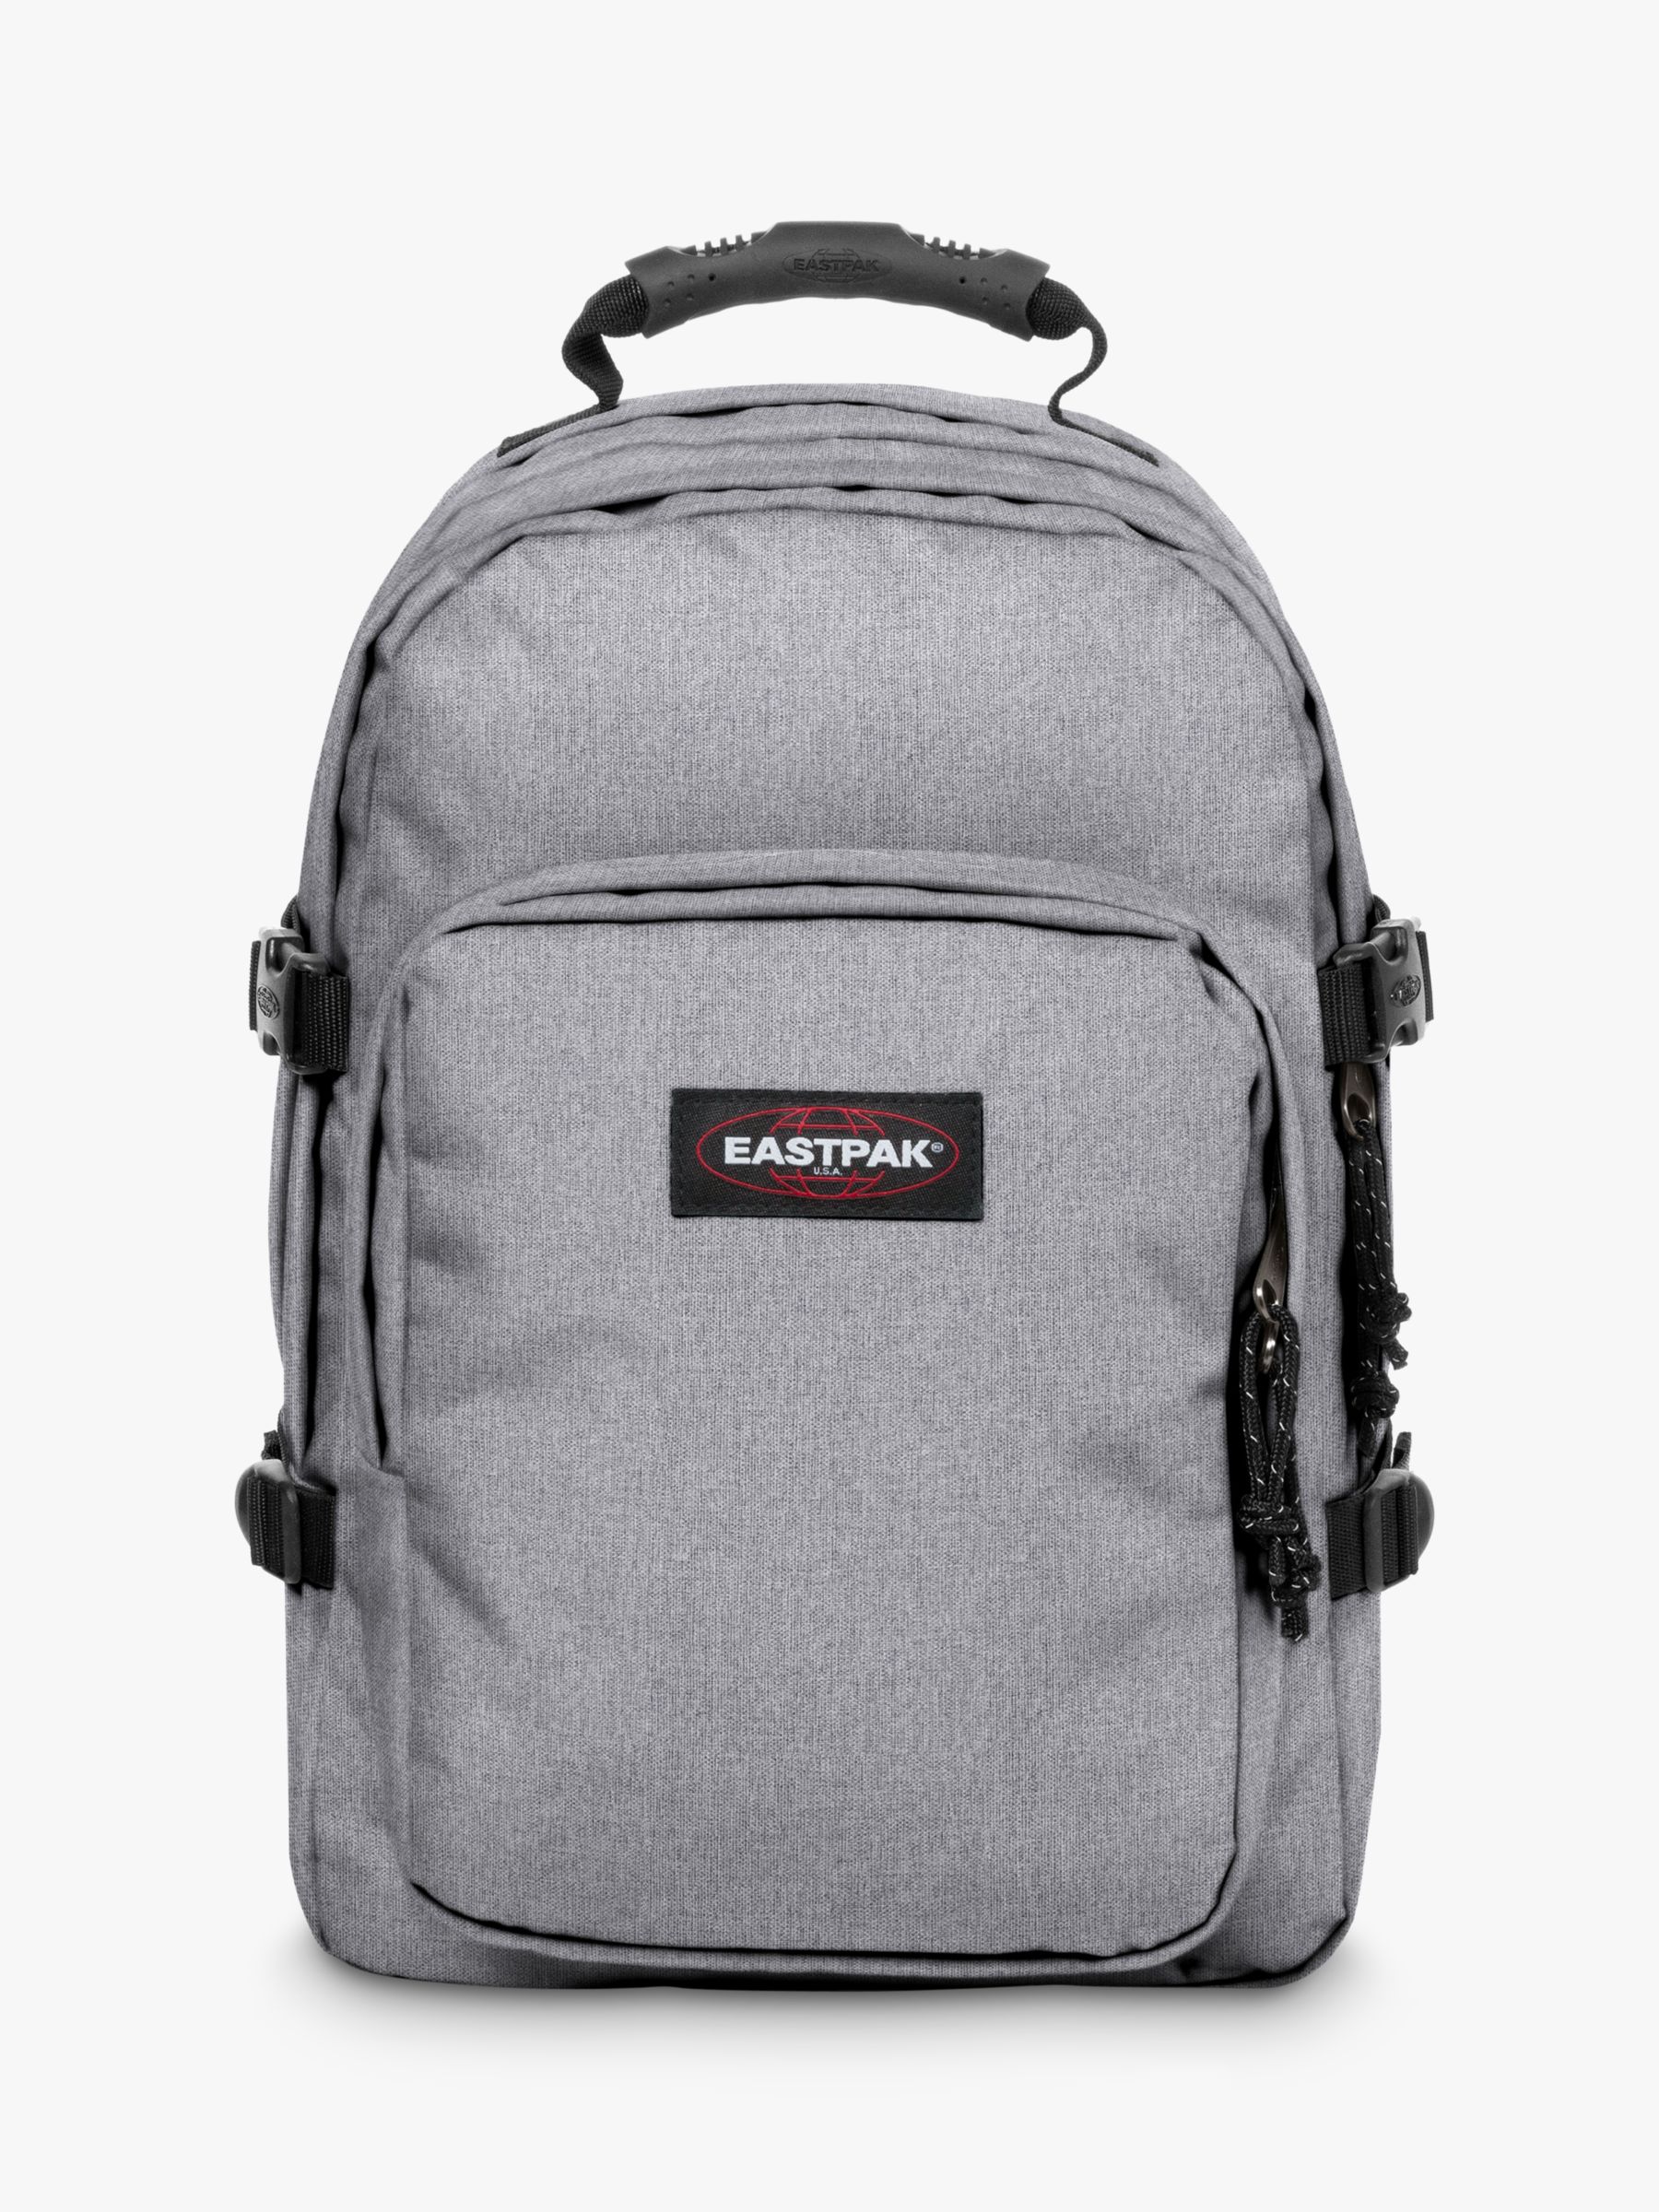 Monografie tetraëder Wet en regelgeving Eastpak Provider Laptop Backpack, Sunday Grey